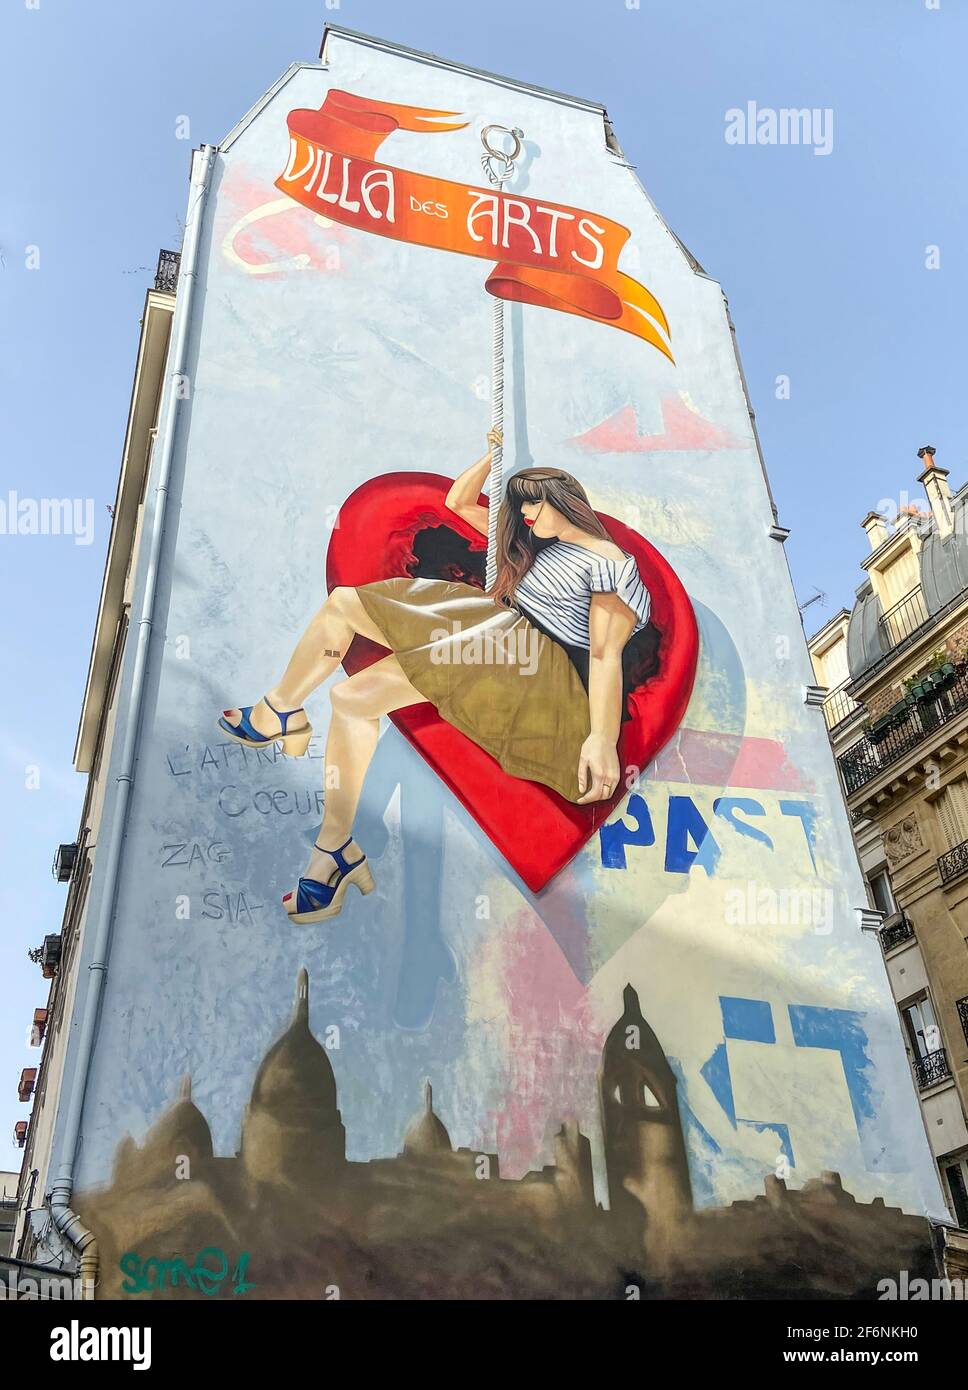 STREET ART, VILLA DES ARTS PARIS Stock Photo